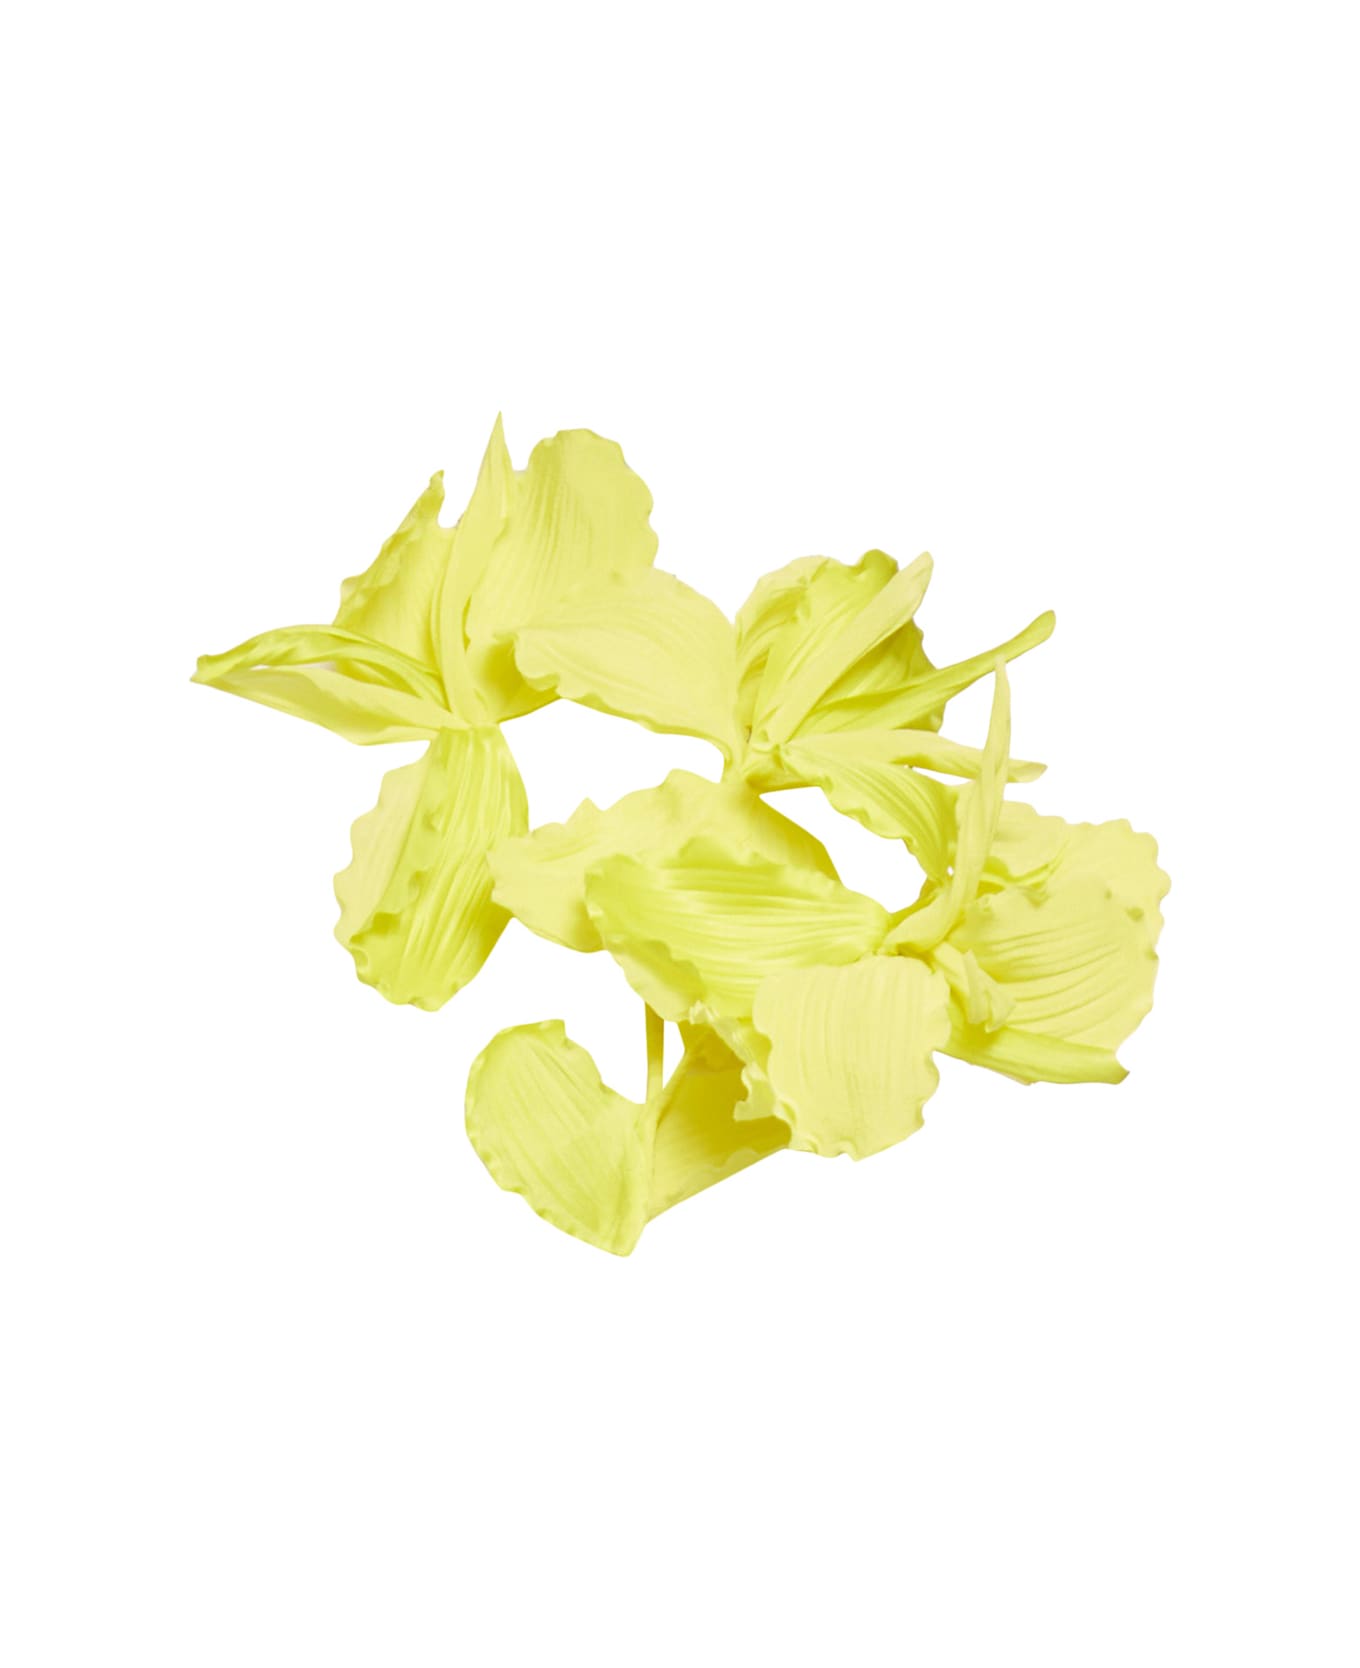 Sucrette Rami Iris In Seta - Yellow